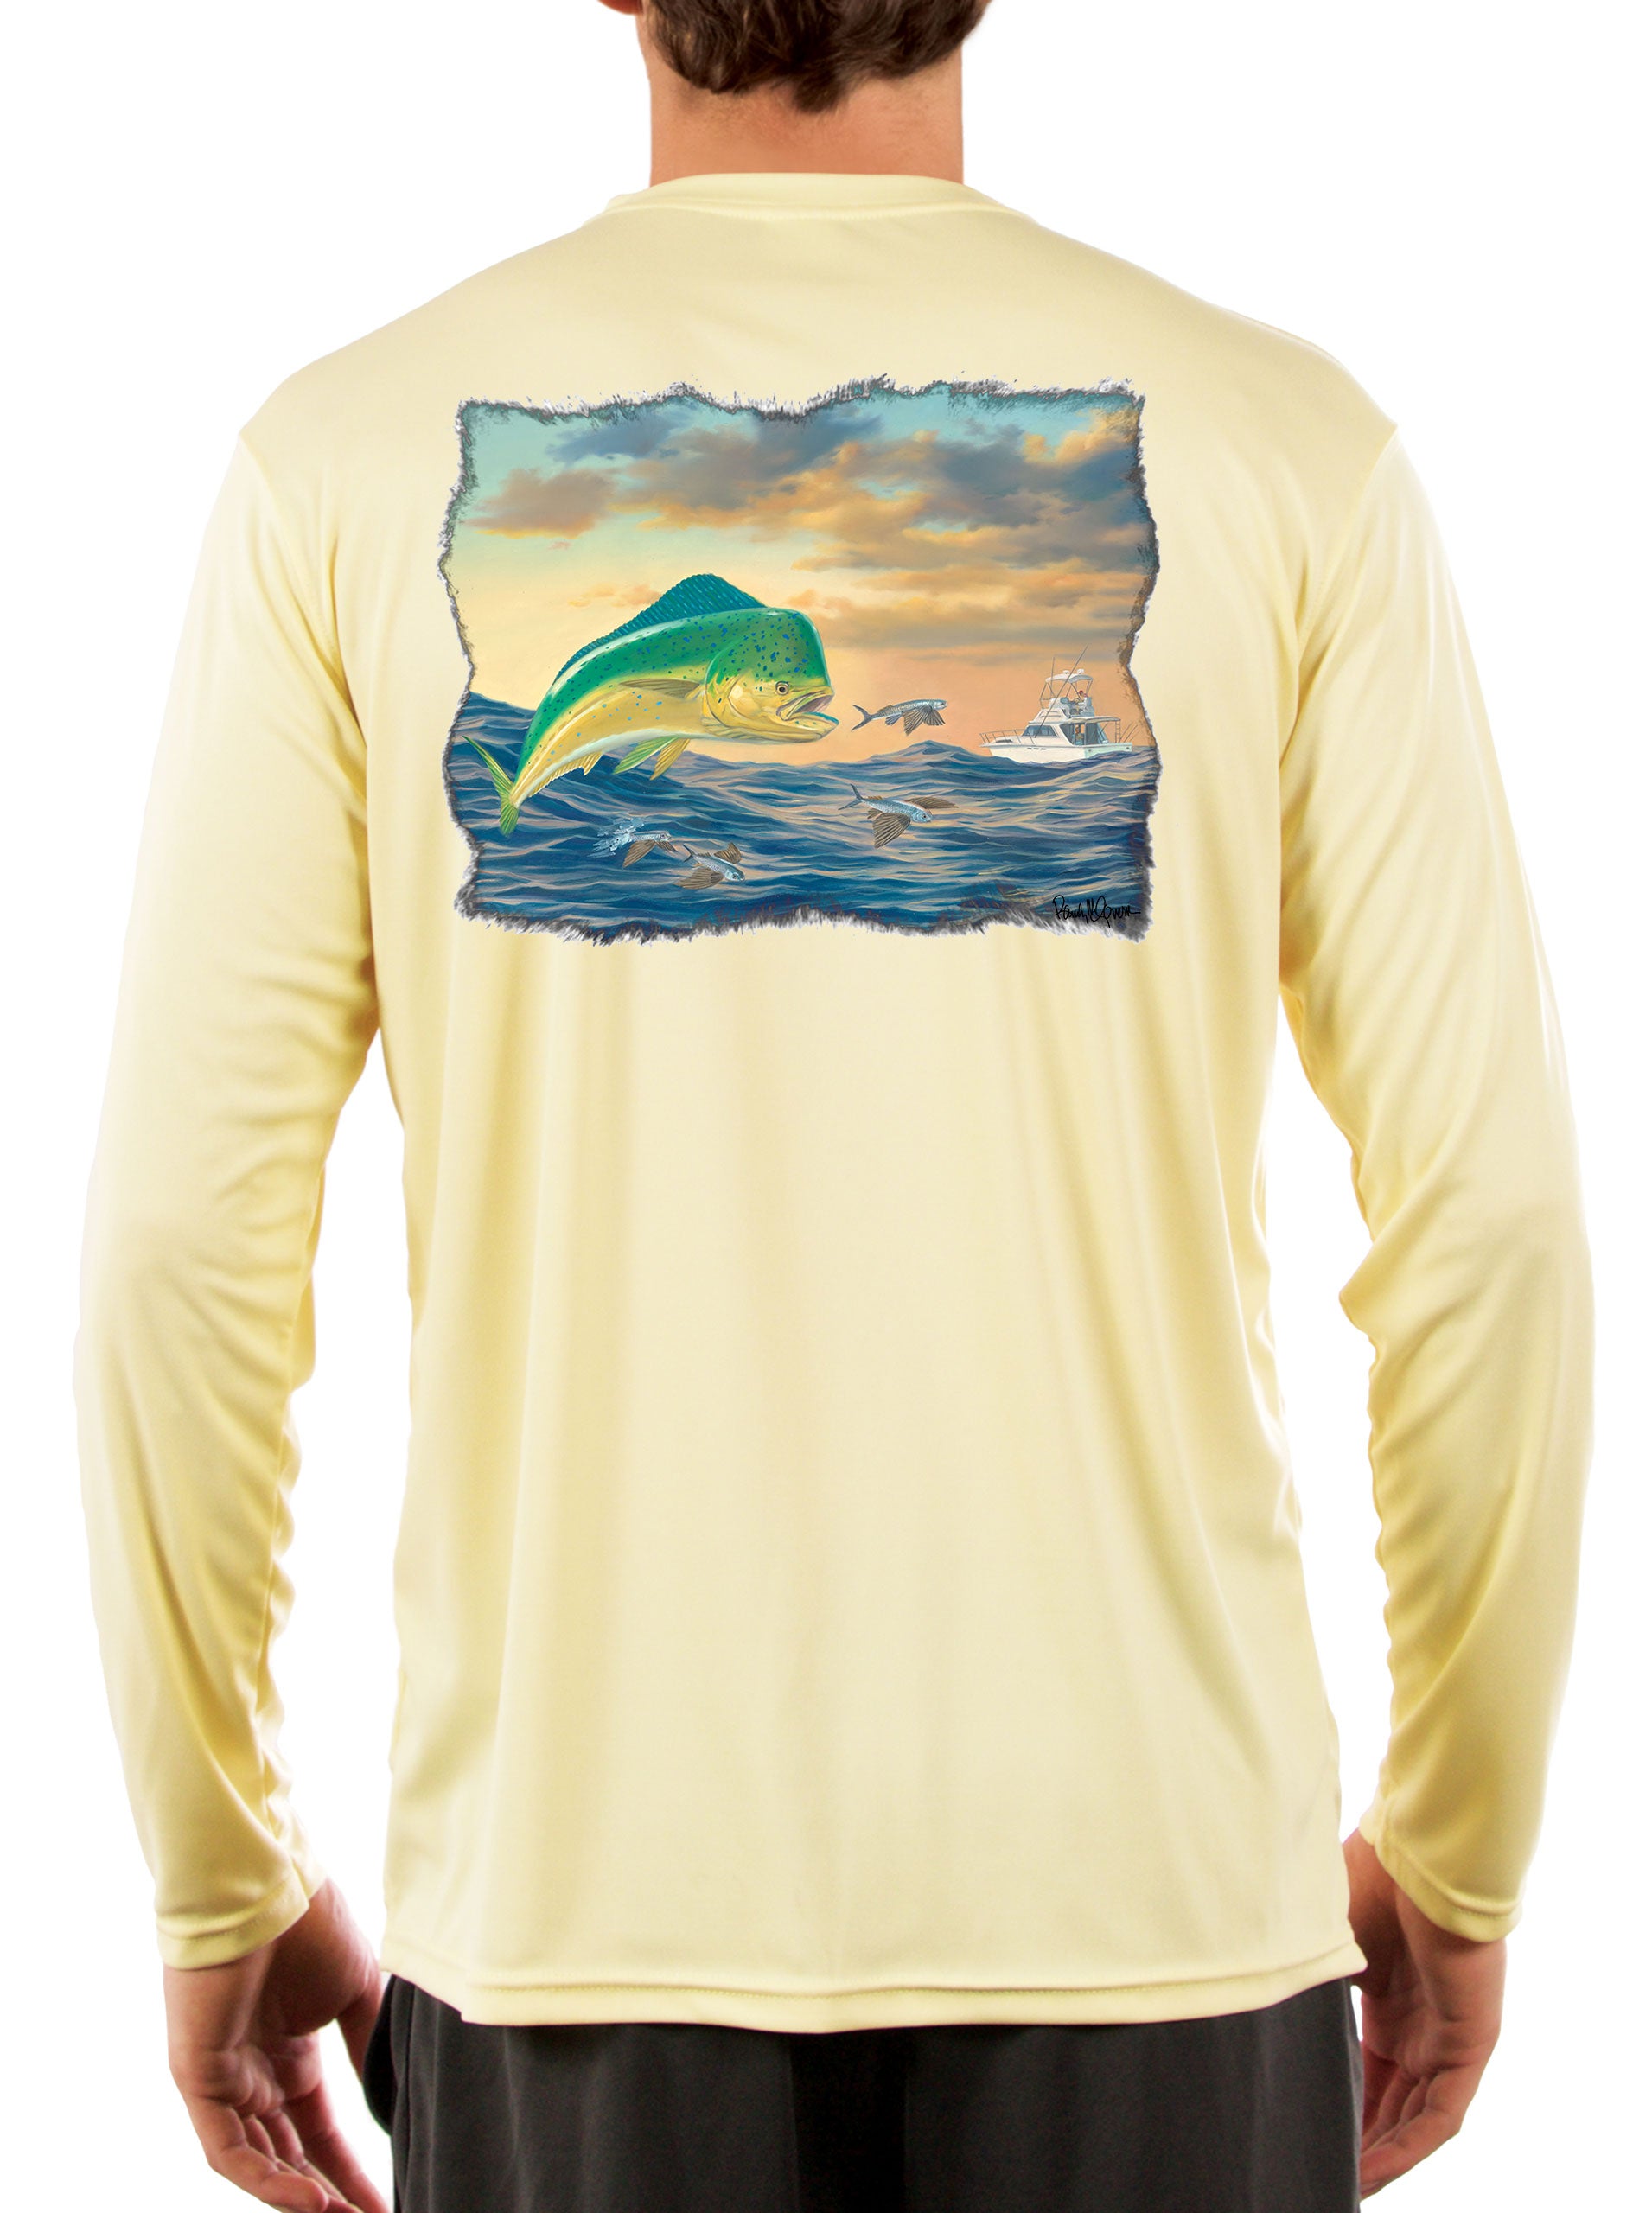 Mahi-mahi with Flying Fish Fishing Shirts for Men Featuring Dorado / Dolphinfish Art by Randy McGovern X-Large / Yellow